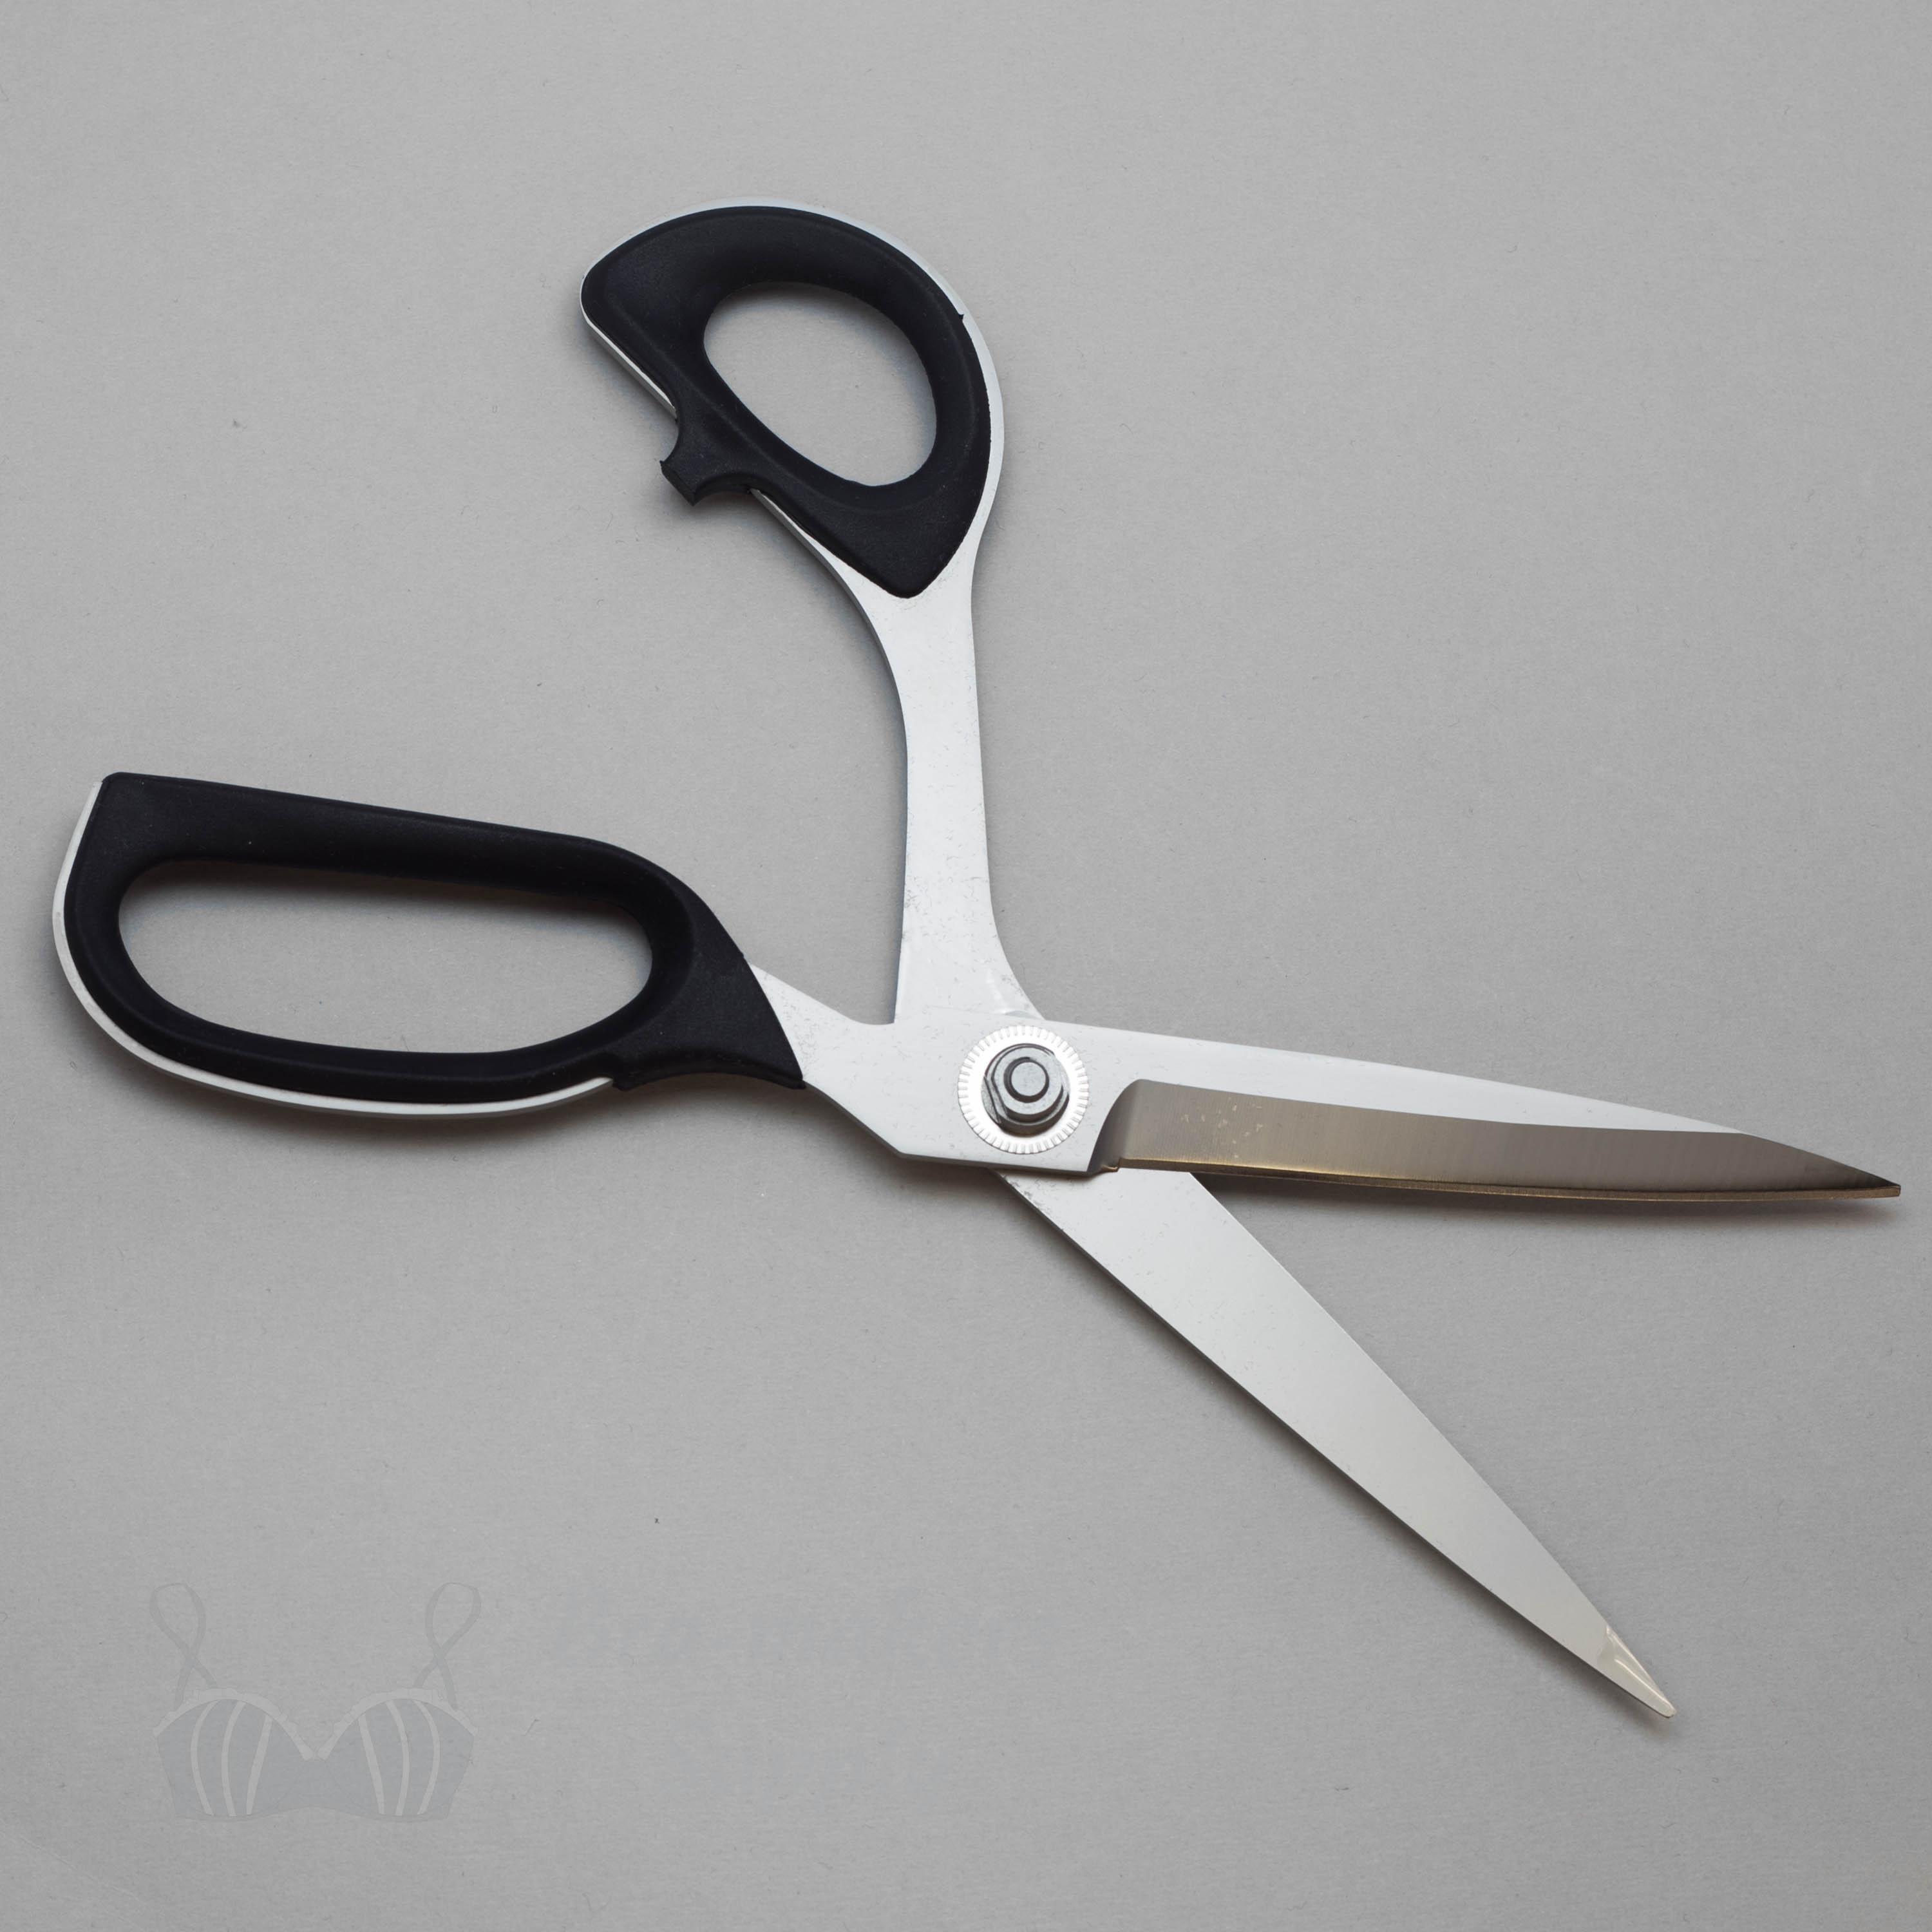 Kai Japan Professional Scissors 230mm #7230 Worldwide